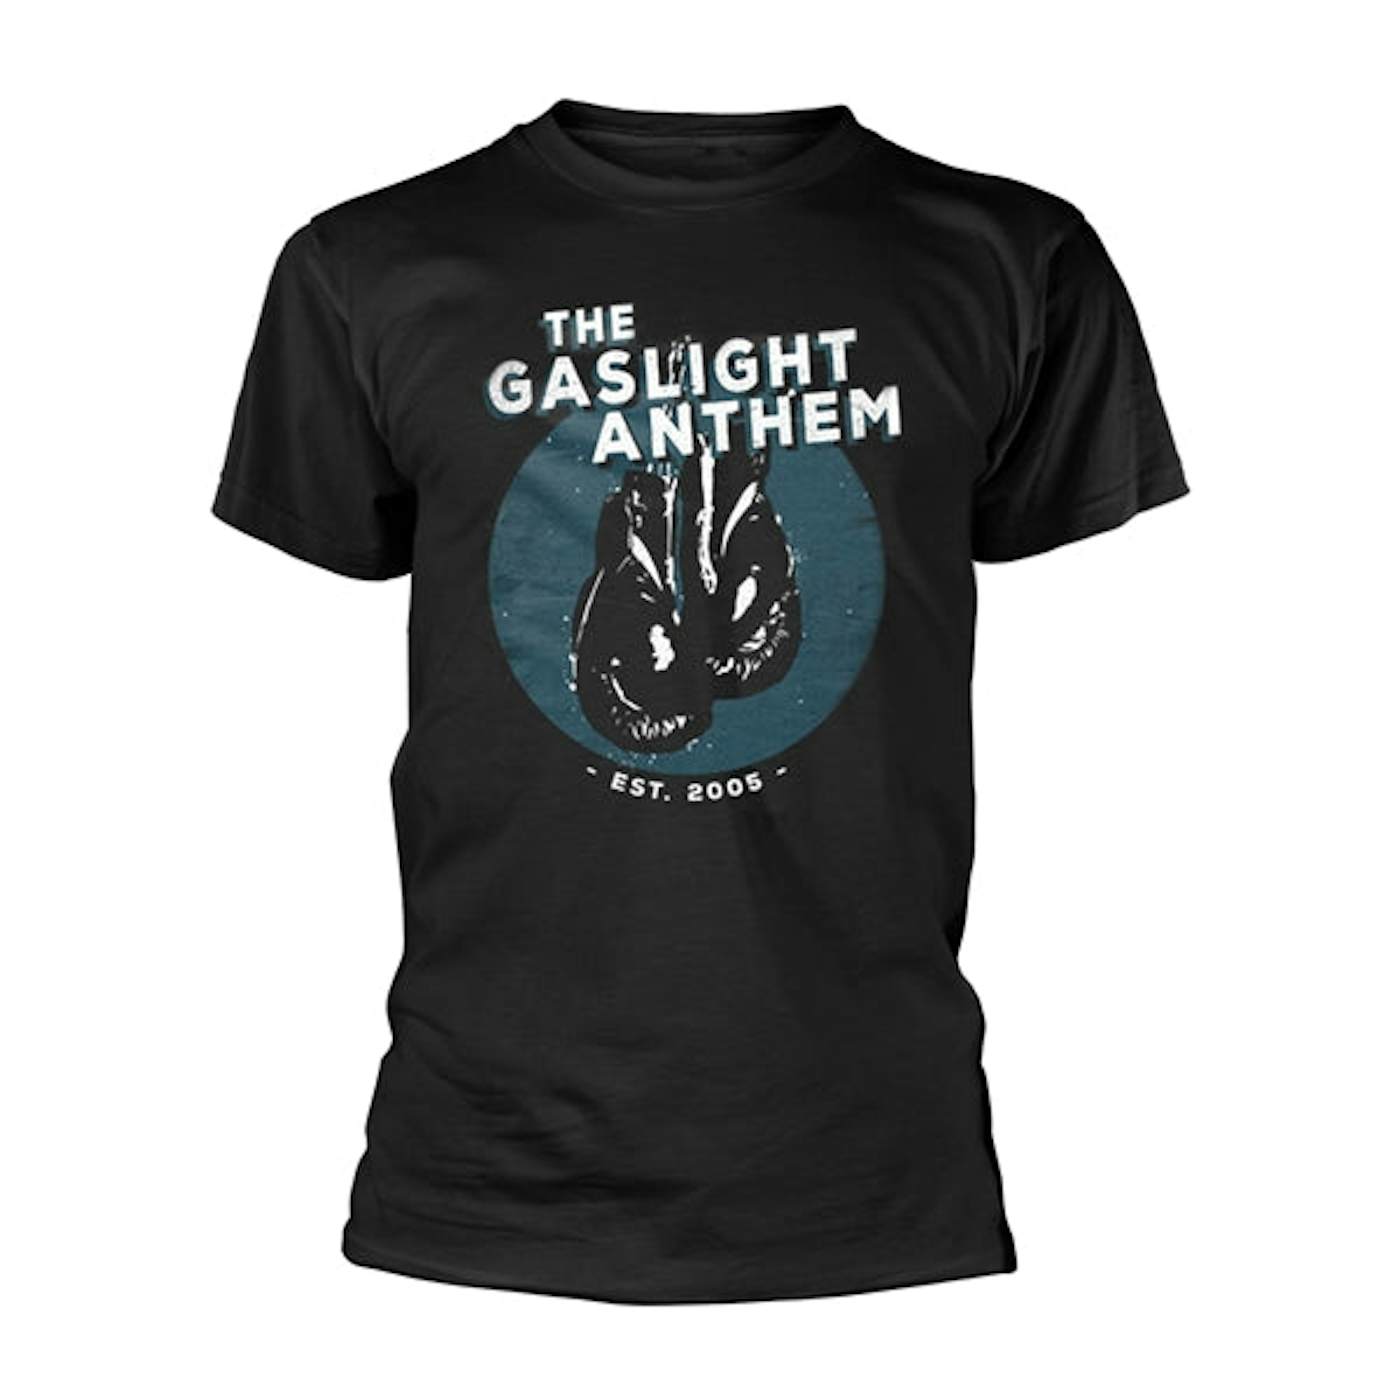 The Gaslight Anthem T Shirt - Boxing Gloves